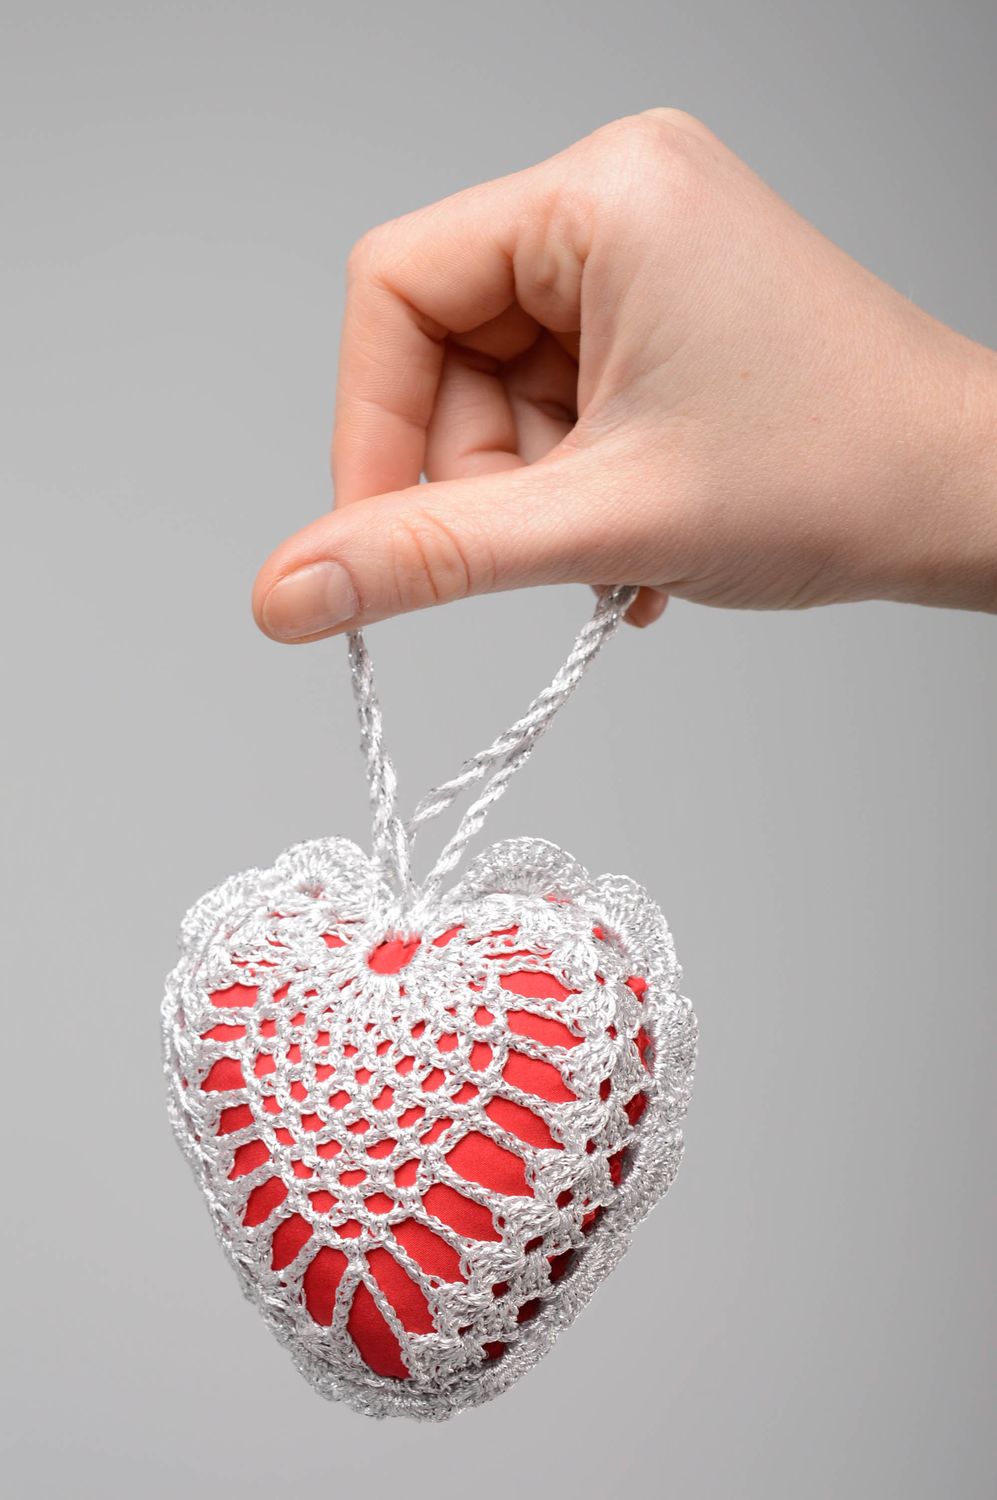 Crochet interior pendant heart photo 4